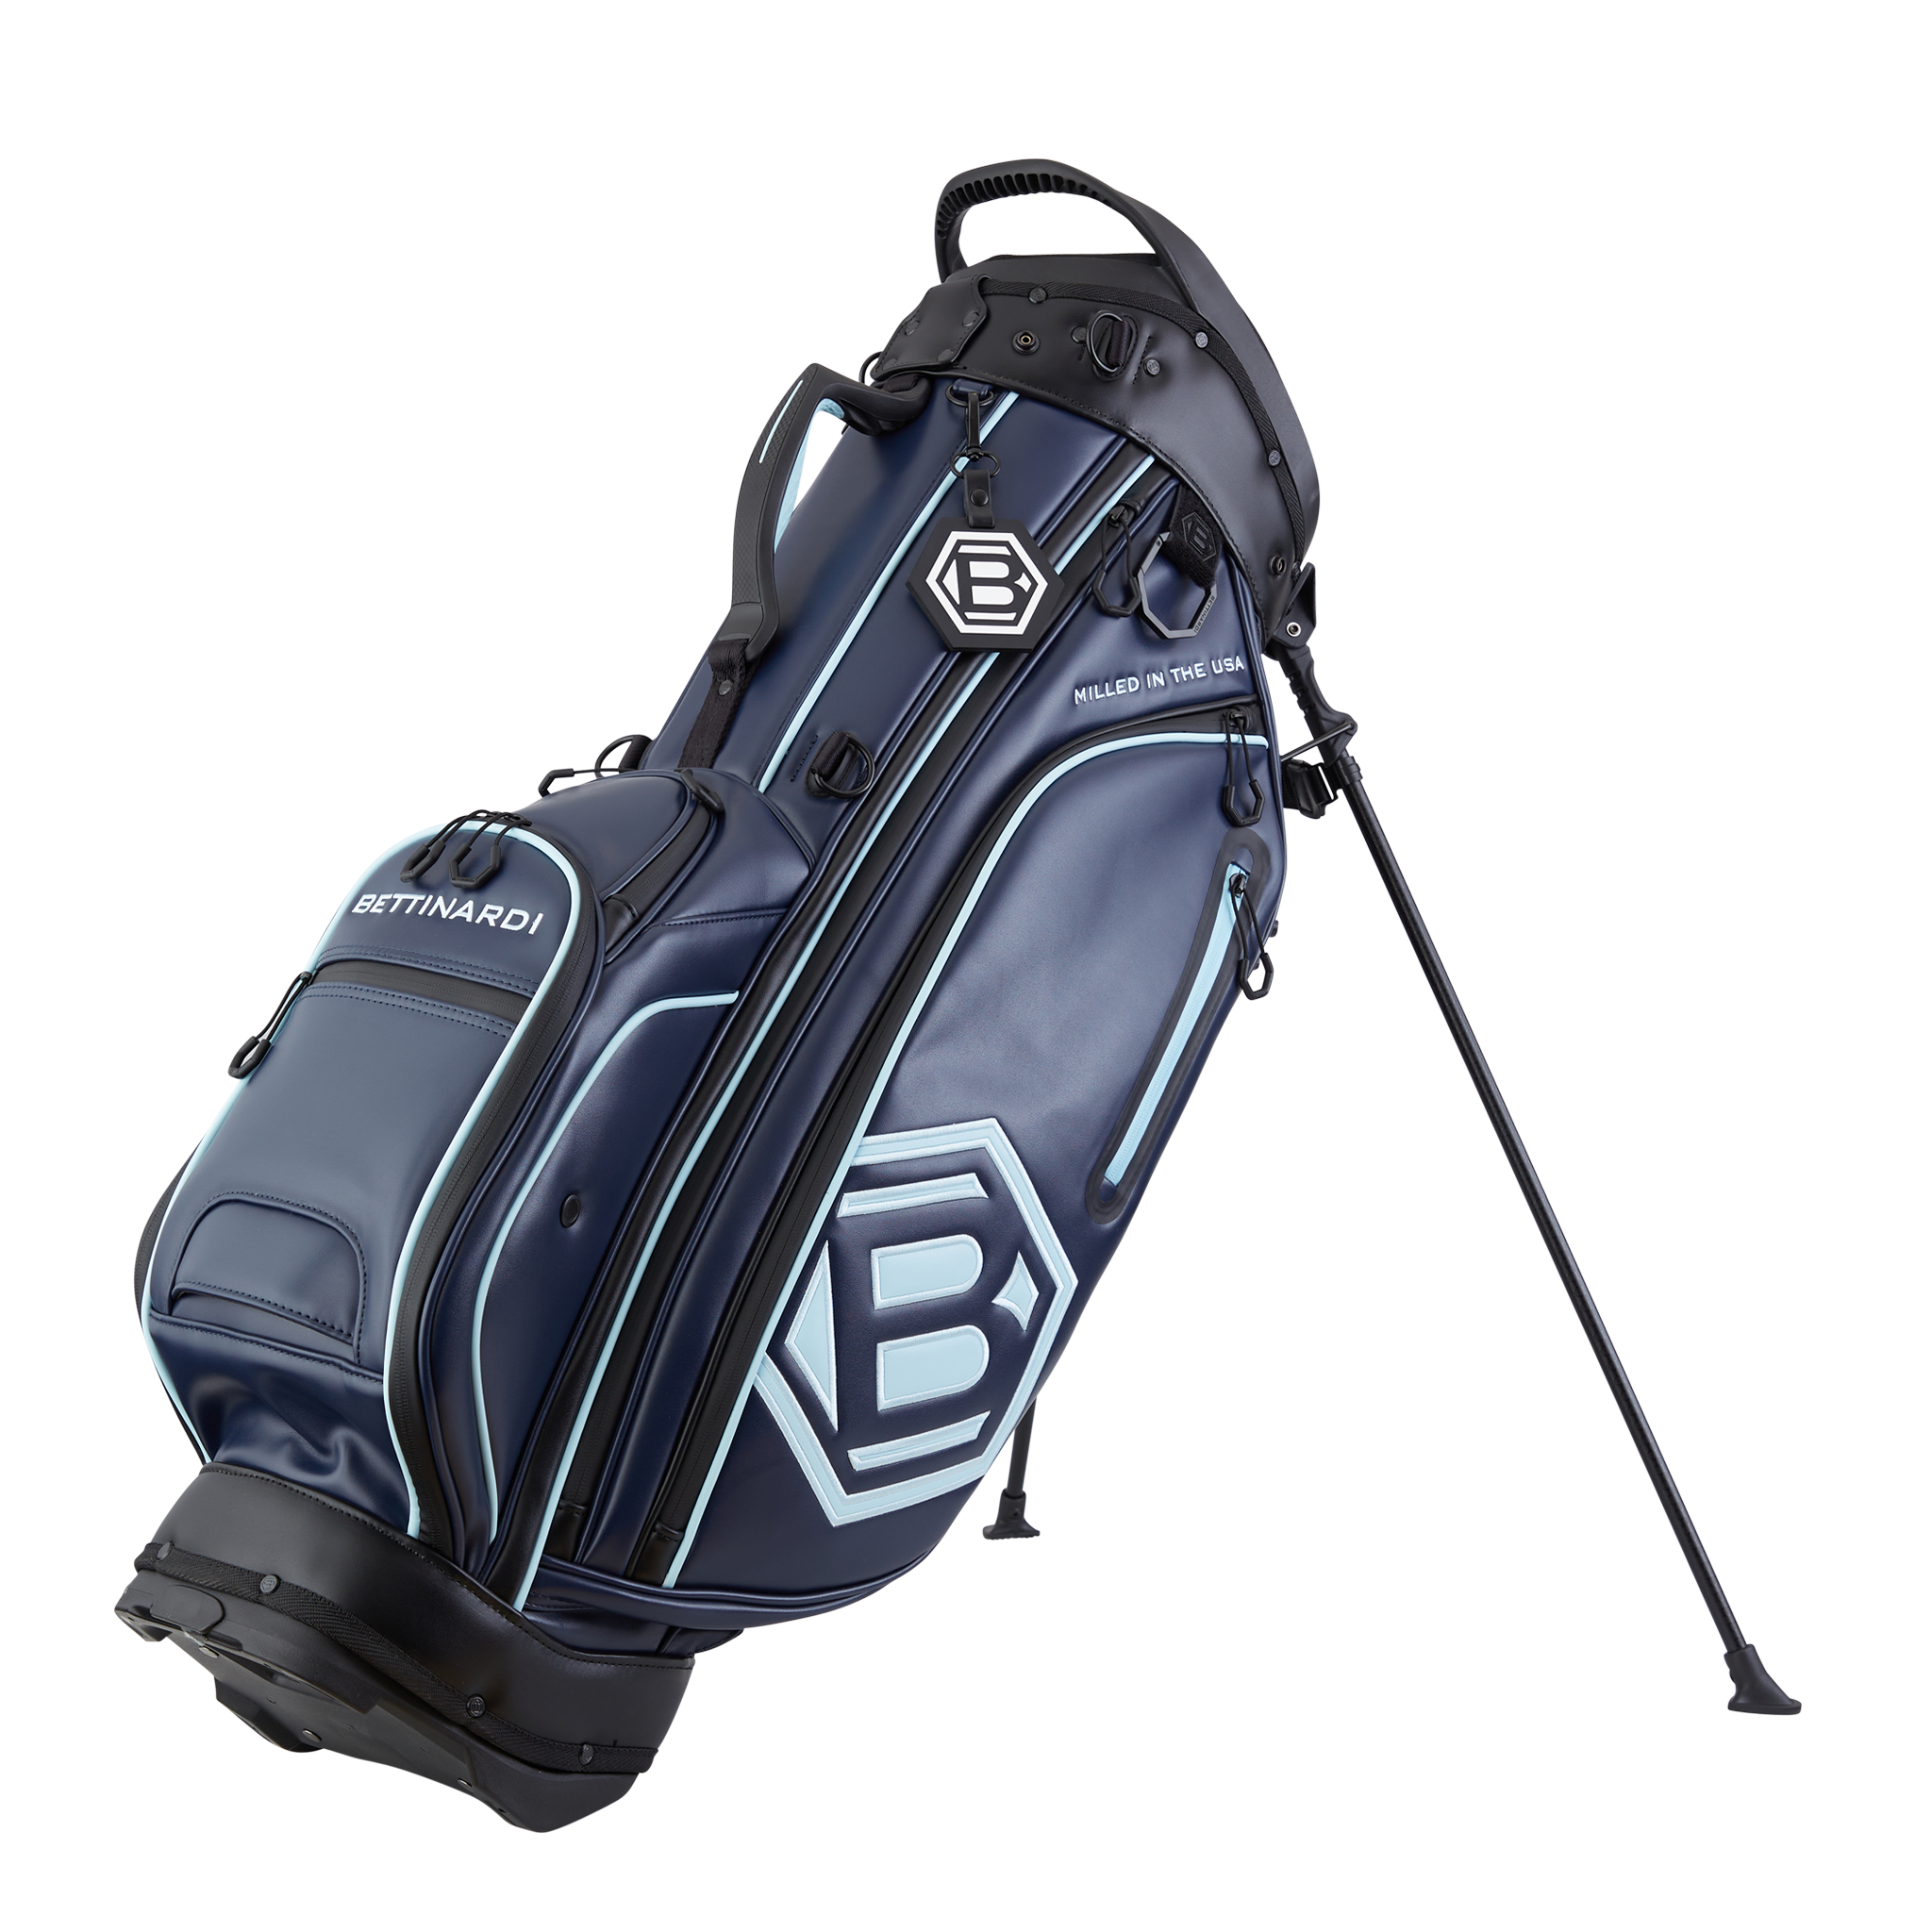 Sea Blue Bettinardi Golf Stand Bag | Bettinardi Golf – Studio B